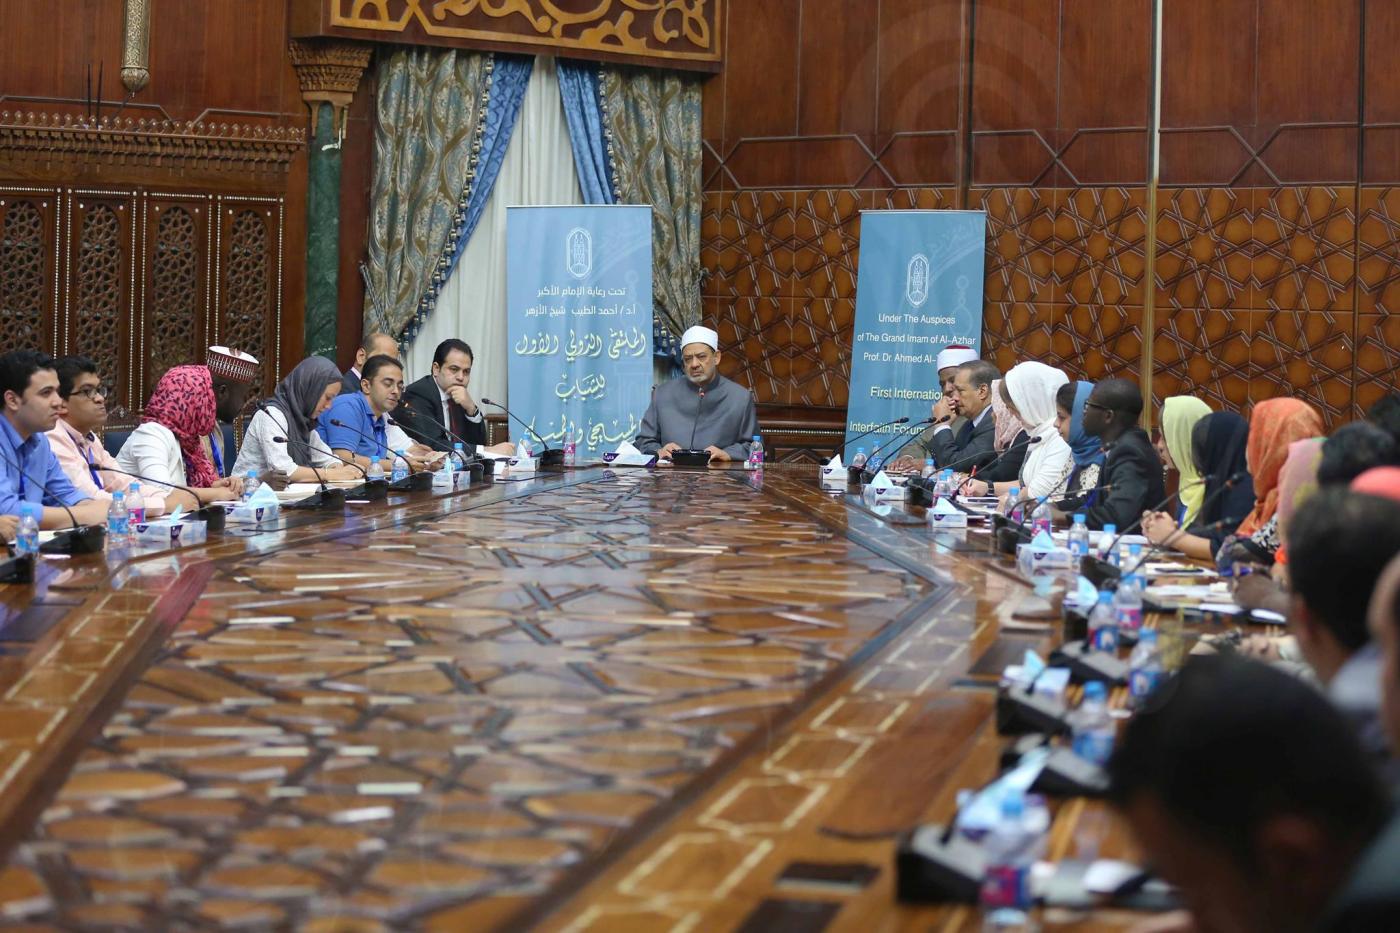 Participants meeting with the Grand Imam Dr. Ahmad Al Tayyeb. Photo: Courtesy of Al-Azhar University